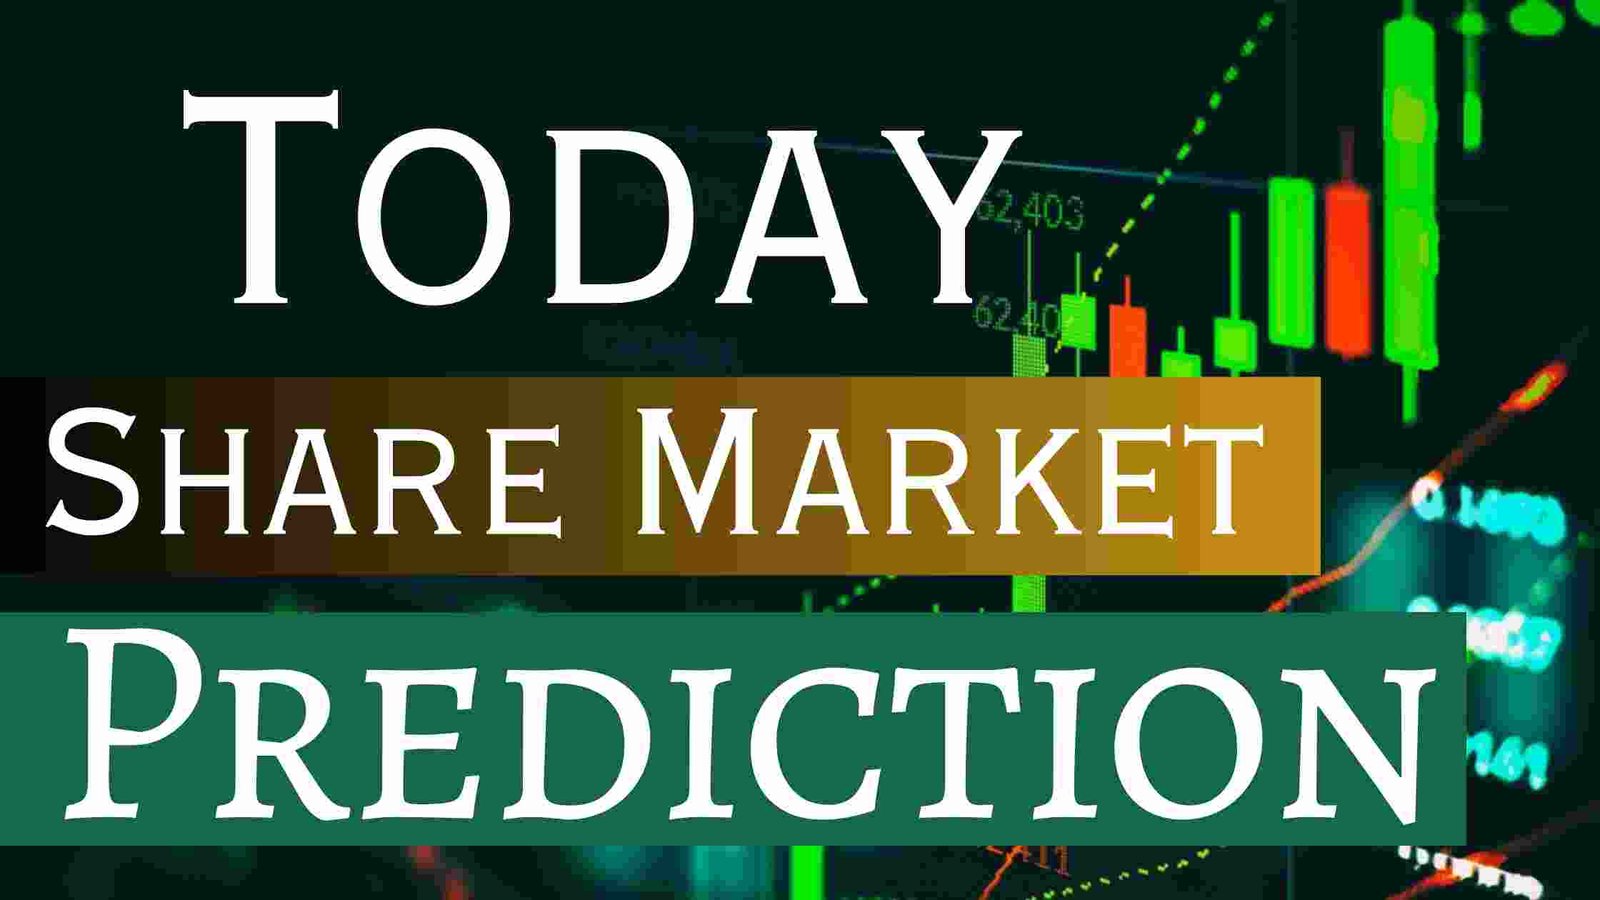 Today Share Market Prediction In Hindi | आज के मार्केट लेवल्स